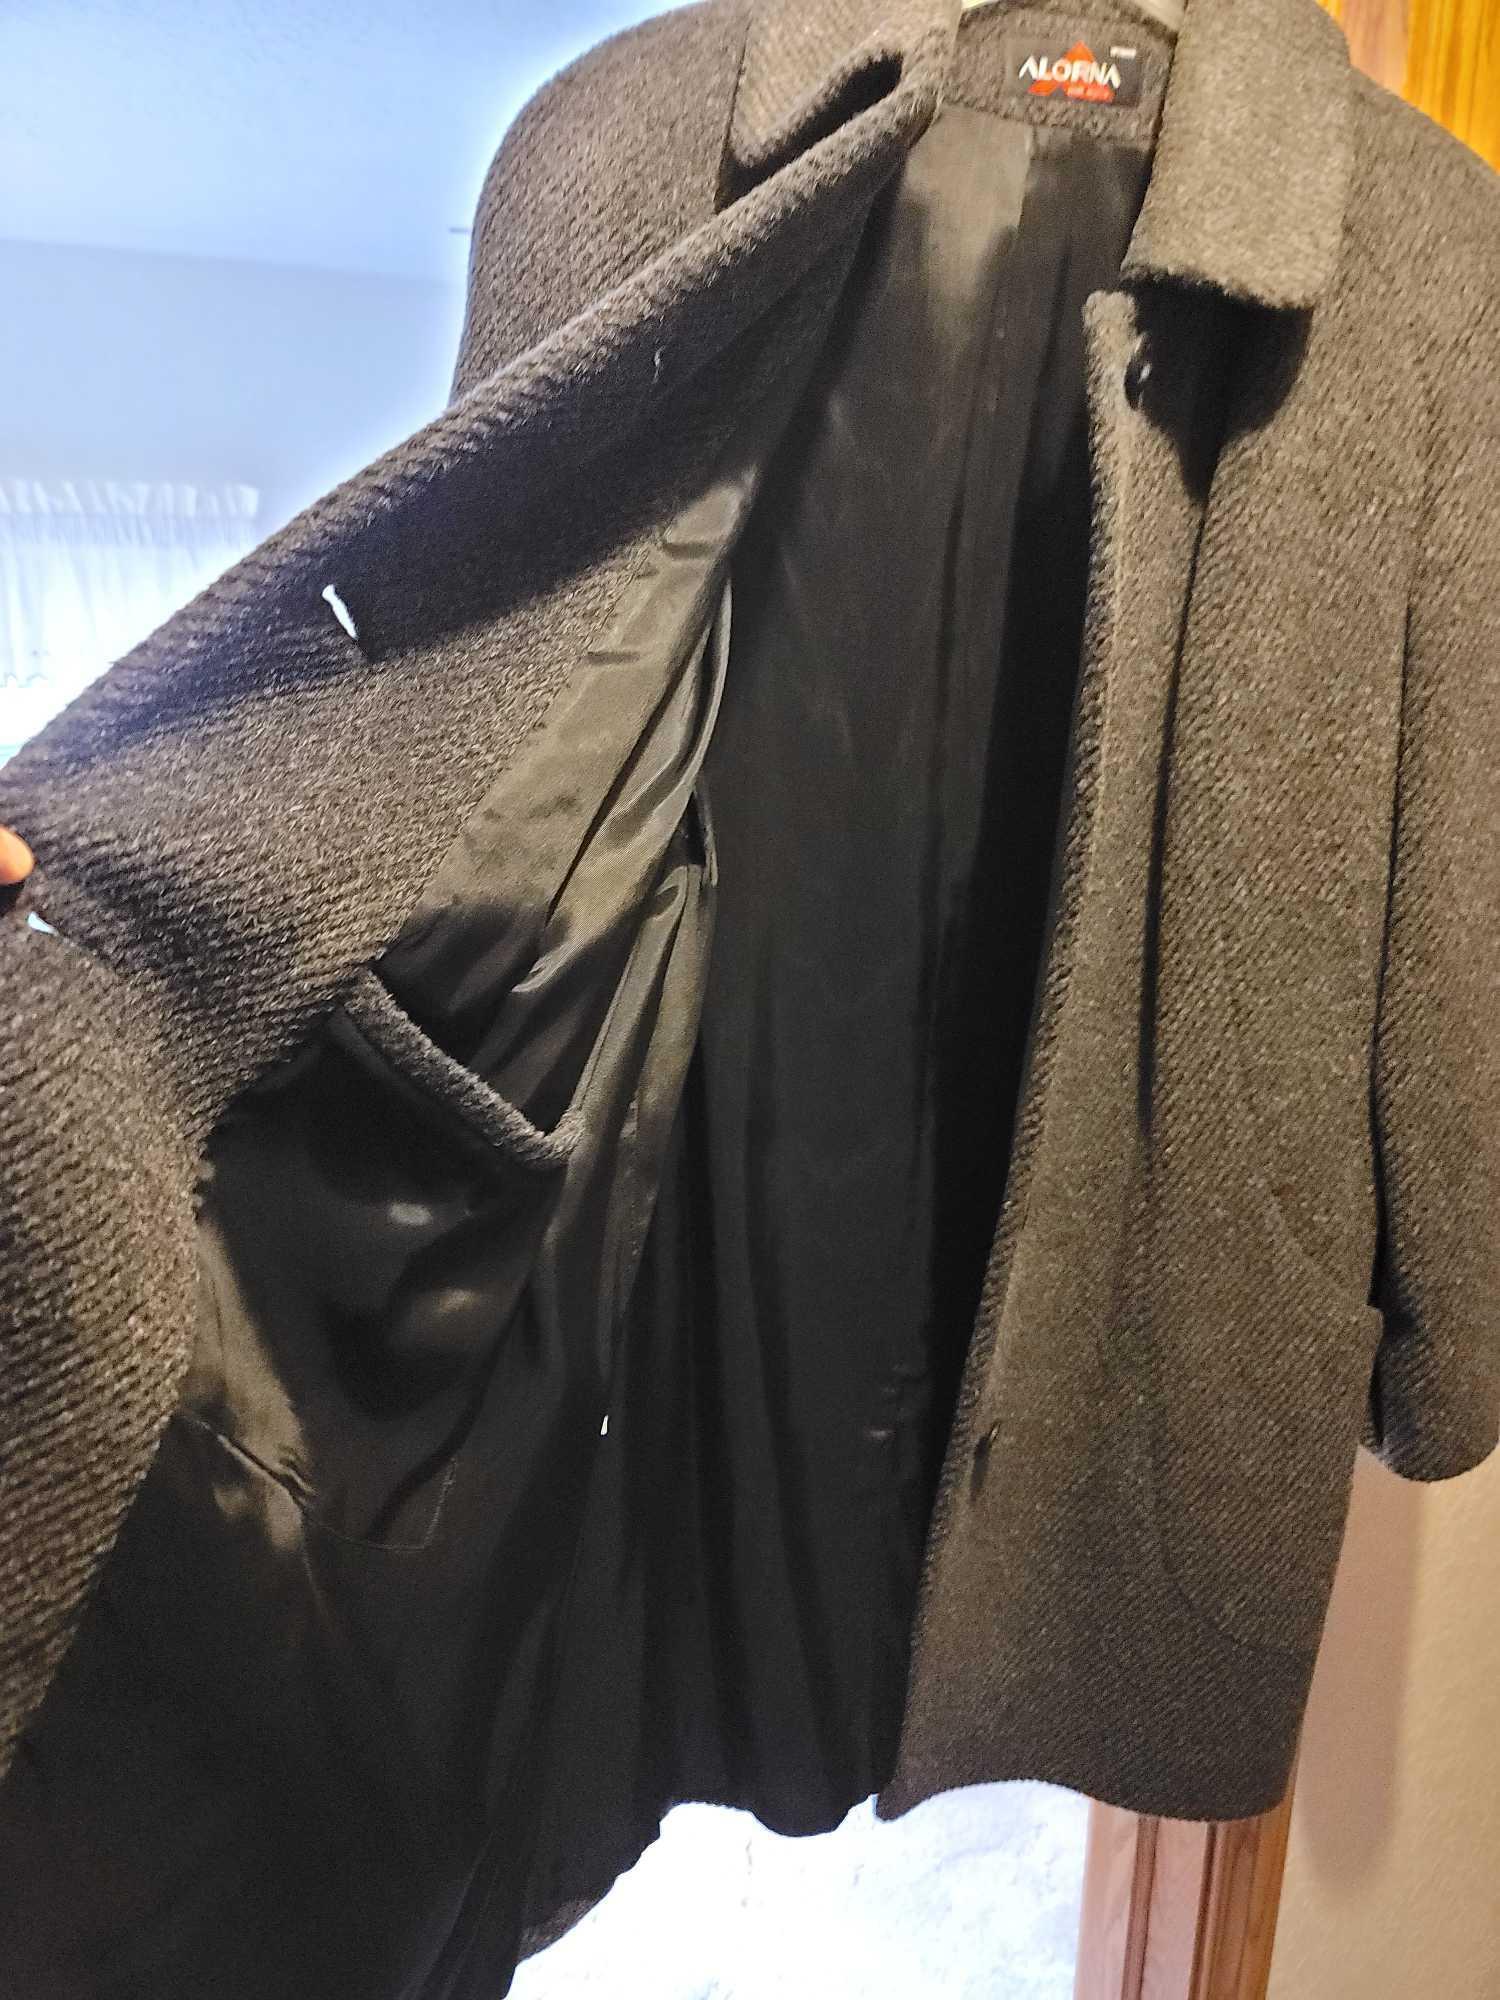 hanging travel bag, silk robe, womens jackets